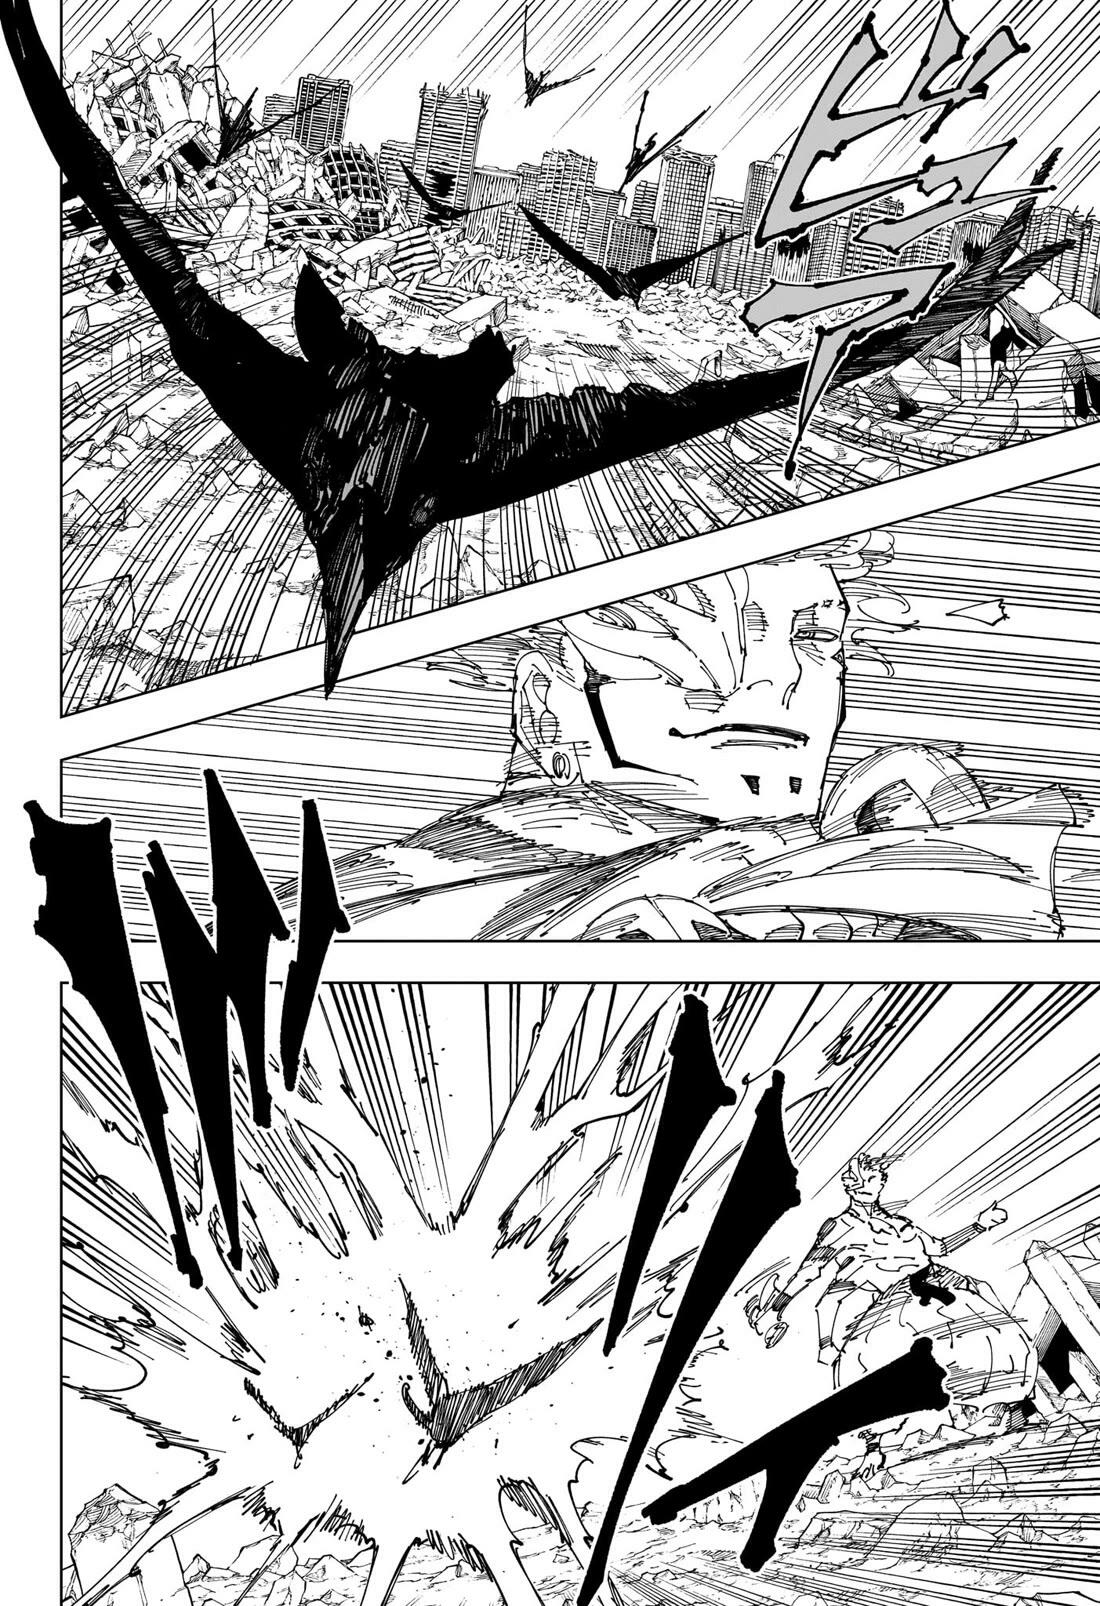 Jujutsu Kaisen Chapter 244: The Decisive Battle In The Uninhabited, Demon-Infested Shinjuku ⑯ page 13 - Mangakakalot